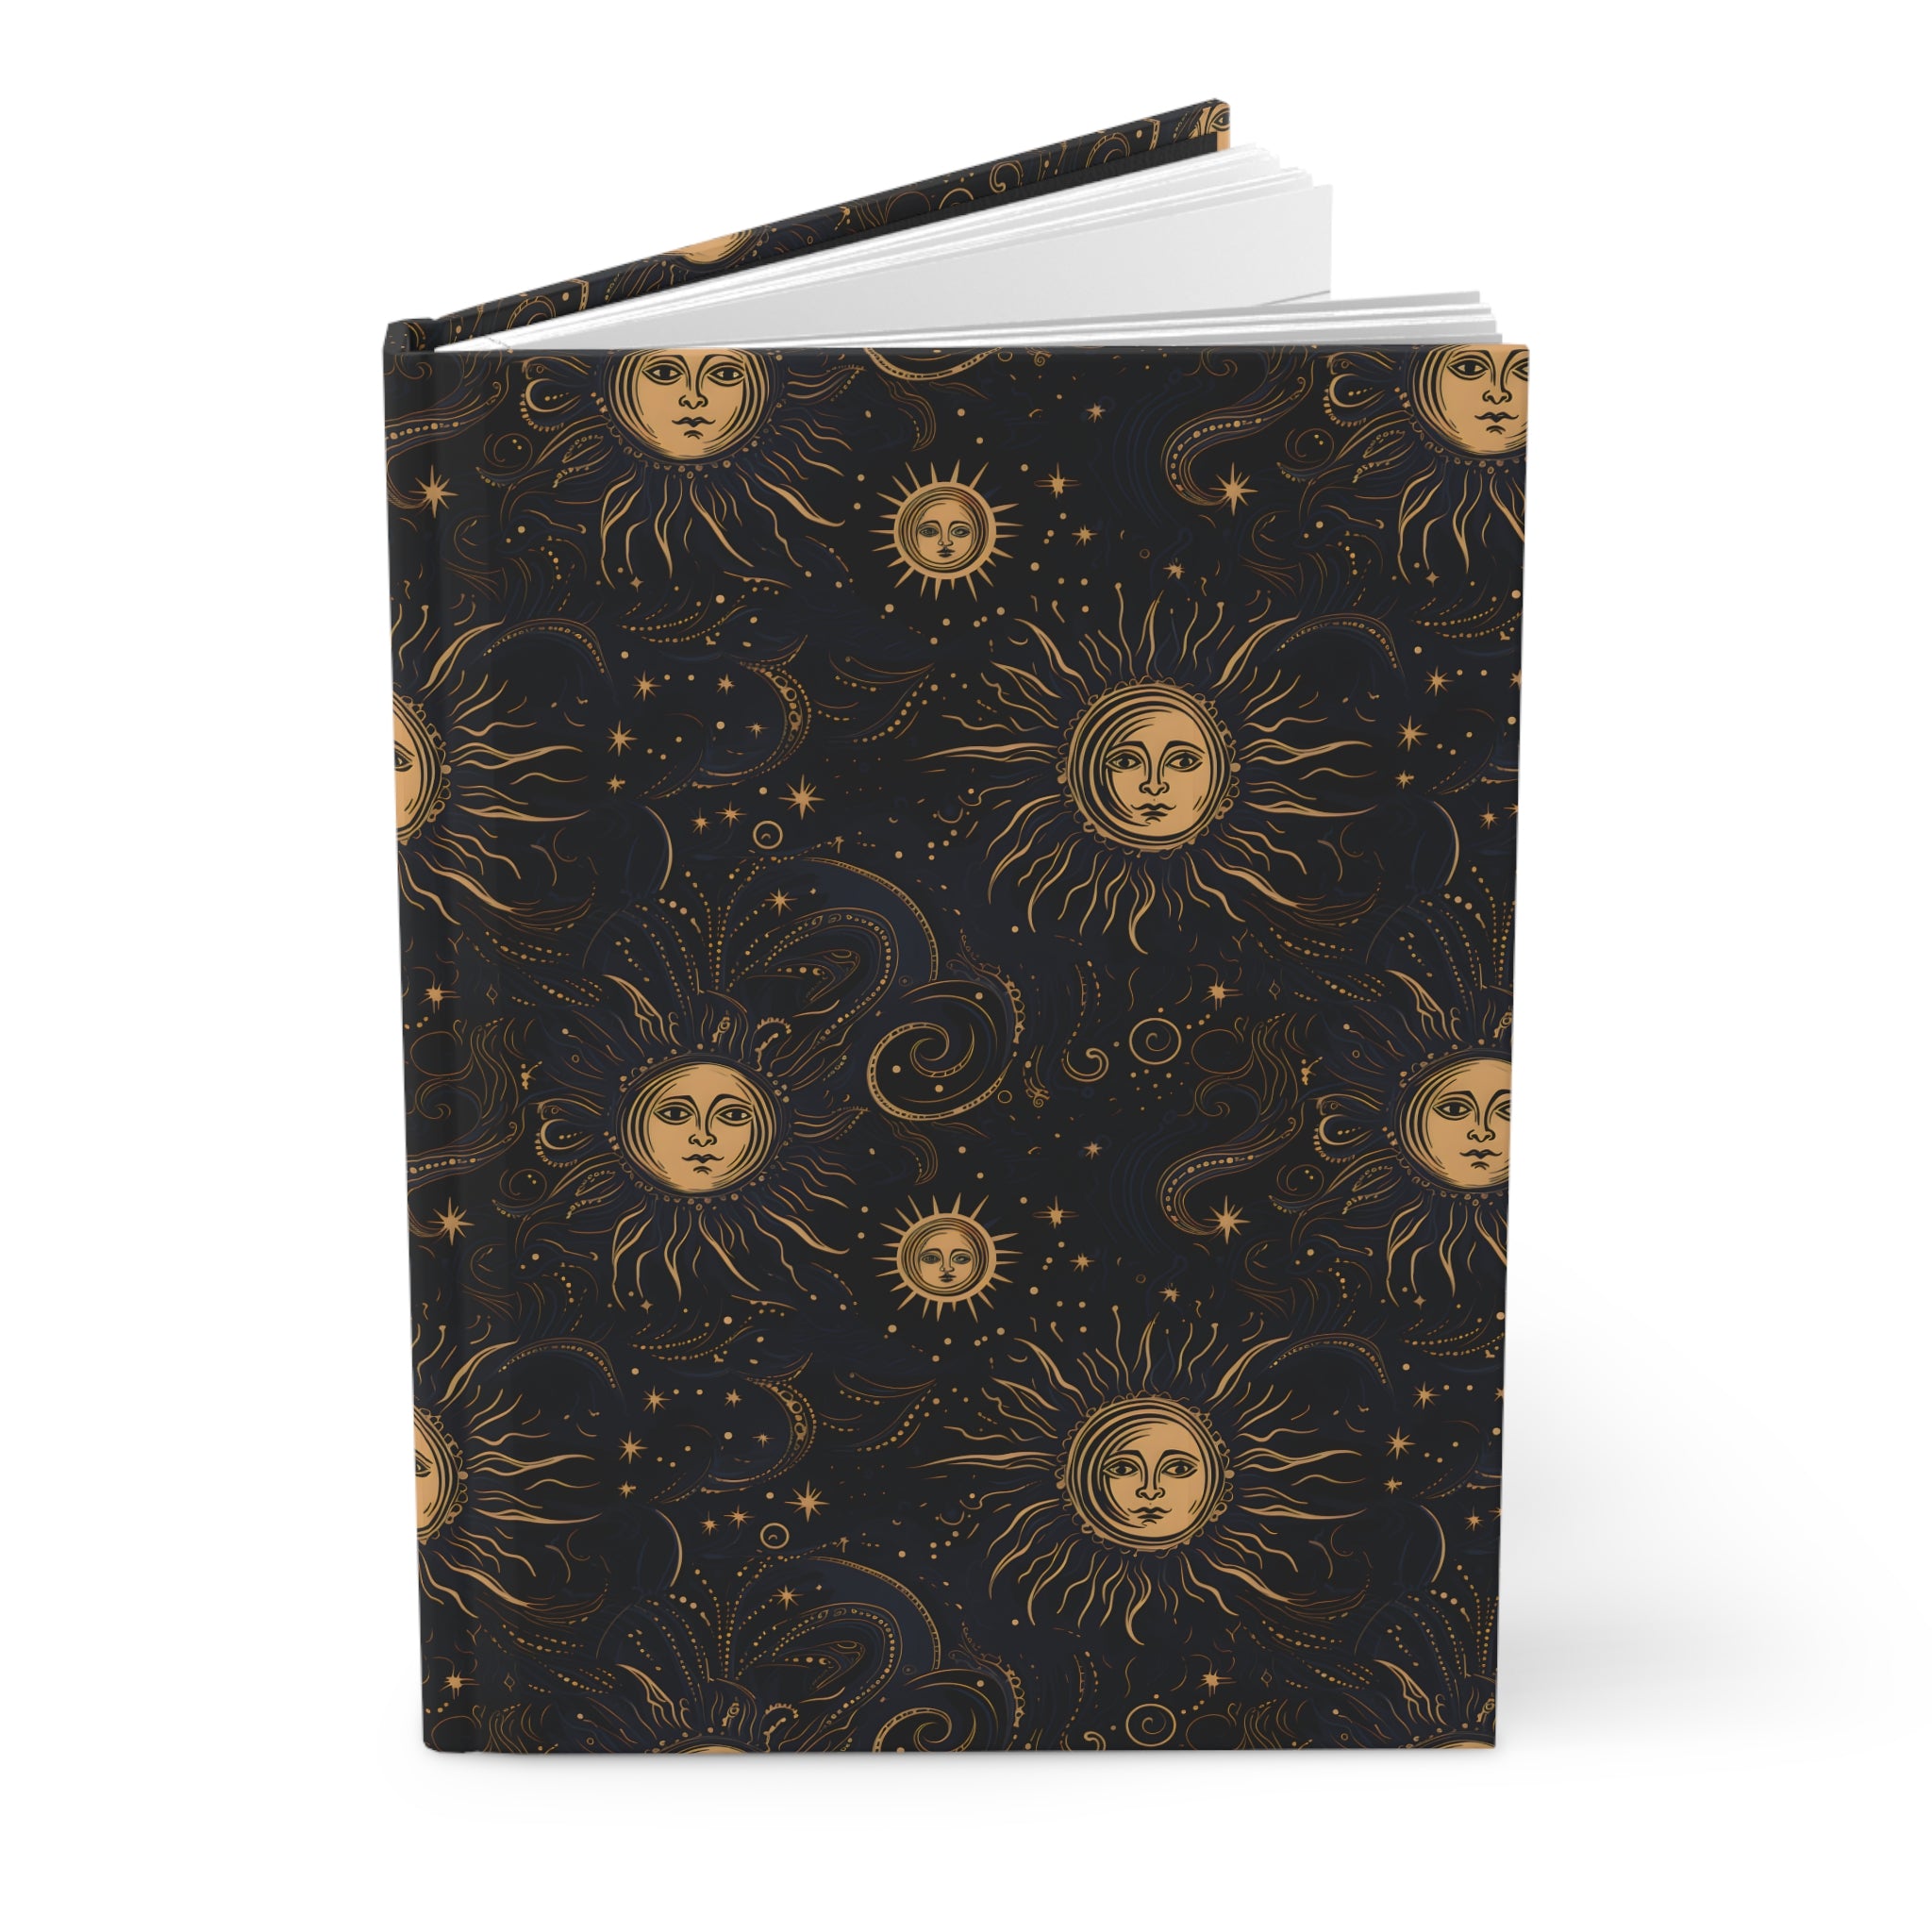 Golden Cosmic Sky Journal: Blank or Lined Notebook